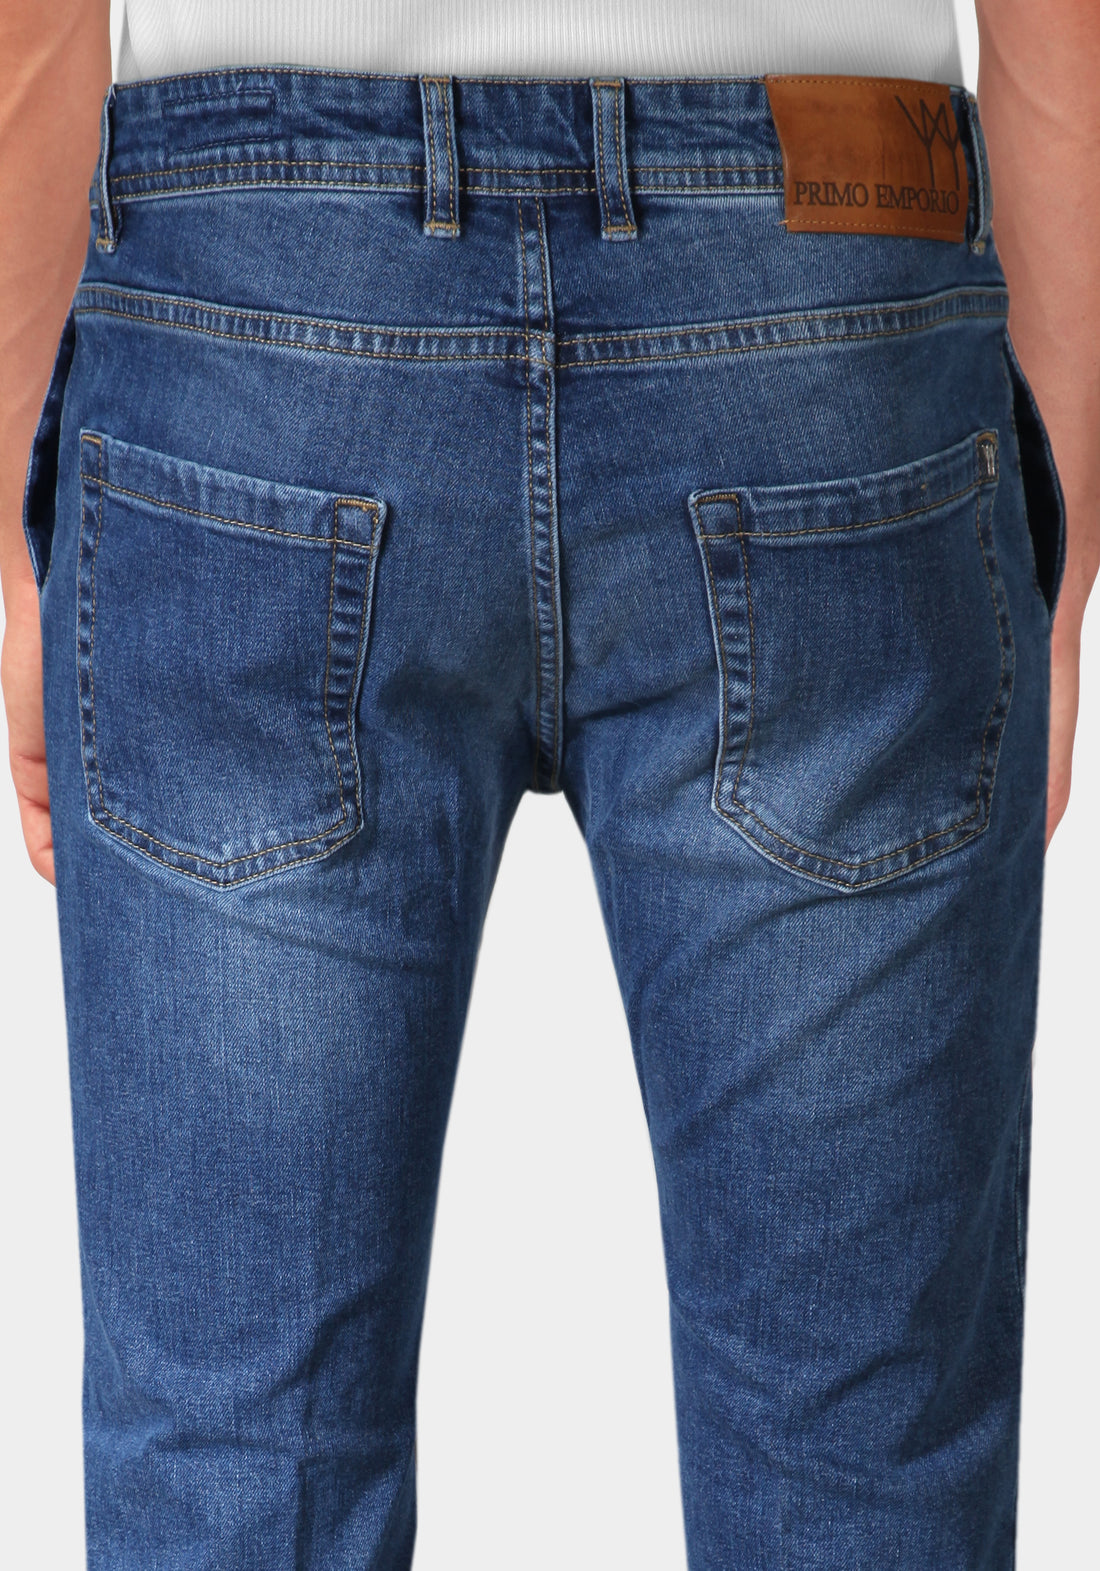 America Pocket Jeans